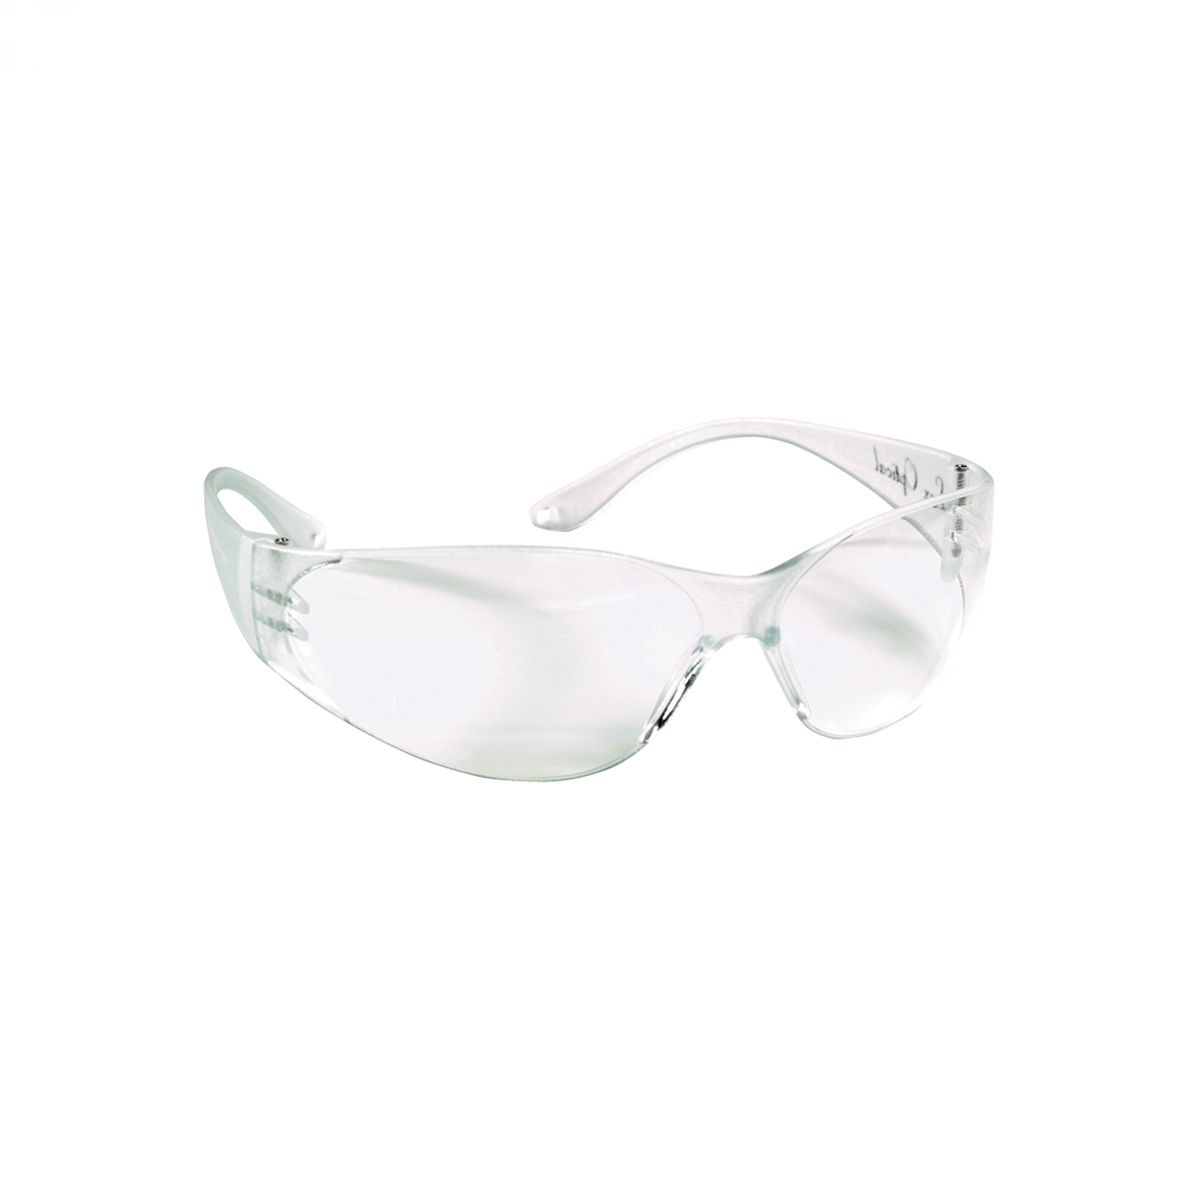 Naočale zaštitne POKELUX